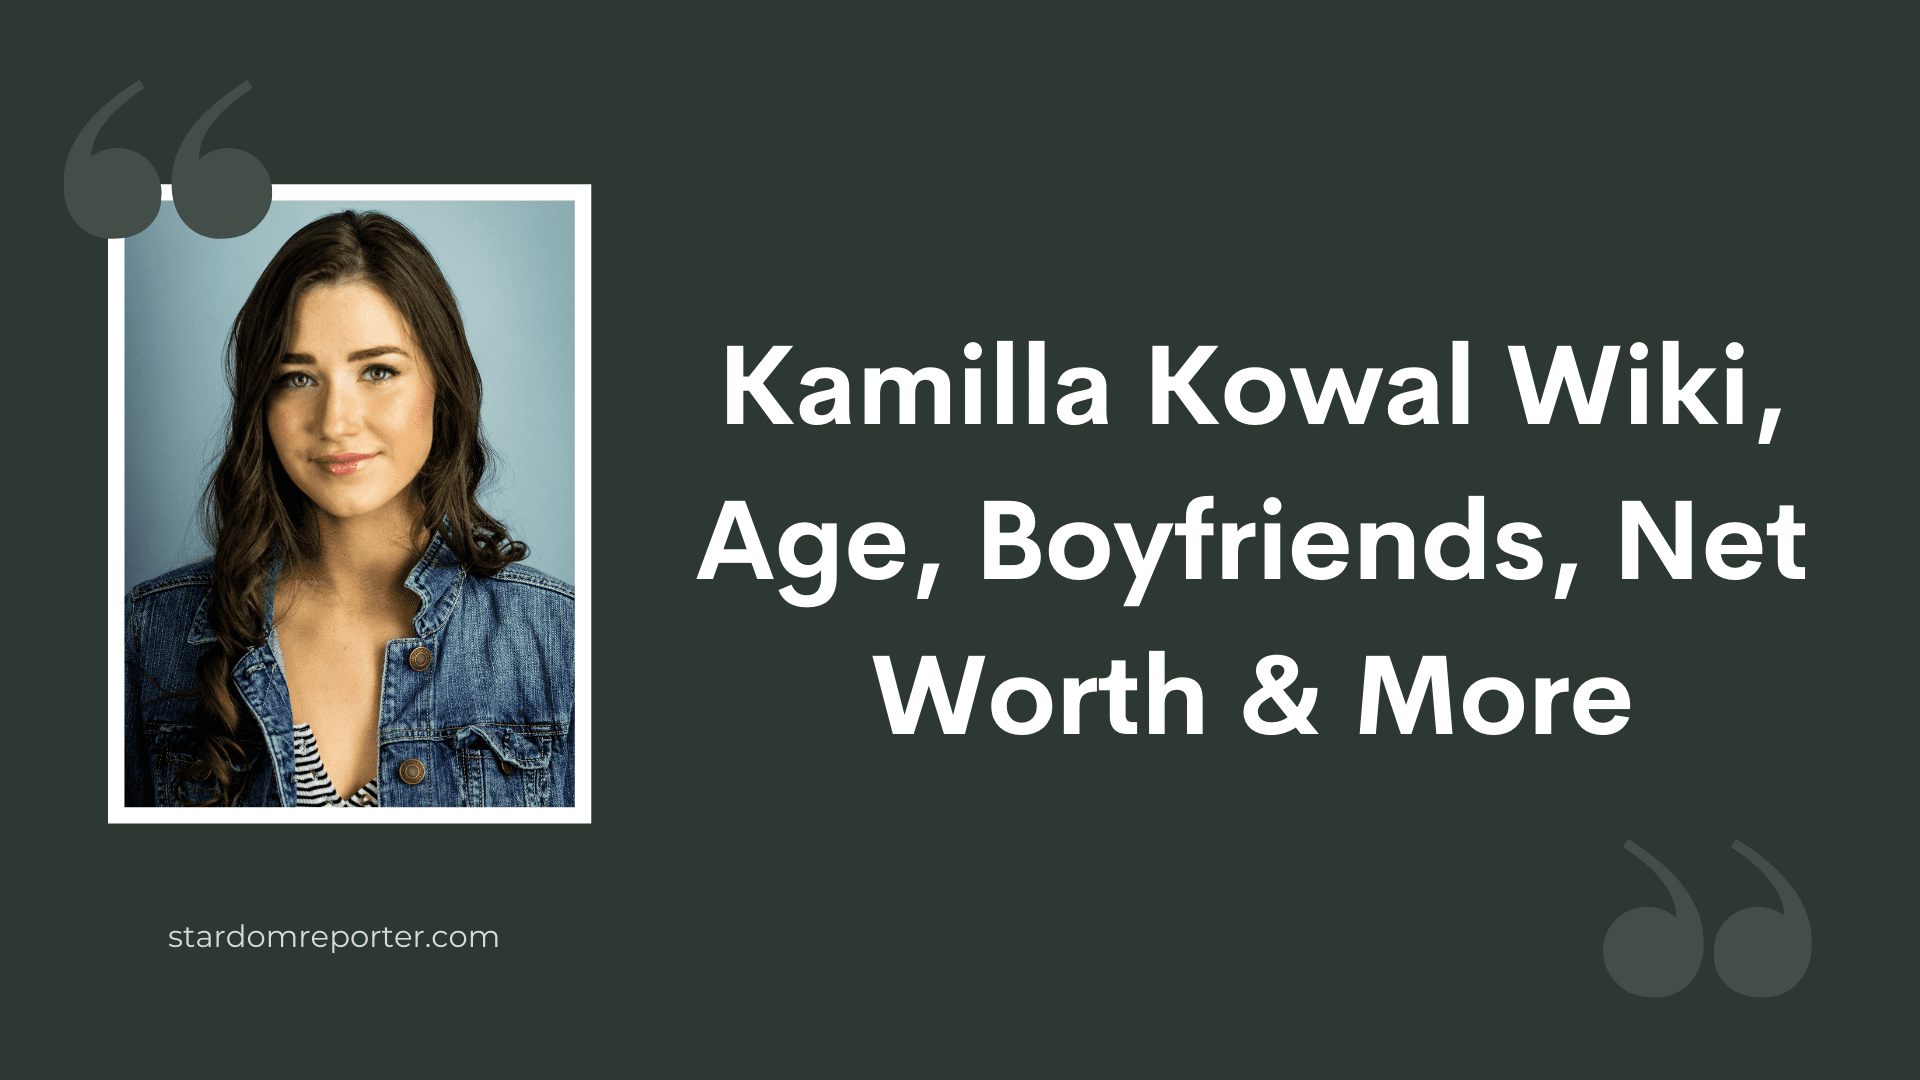 Kamilla Kowal Wiki, Age, Boyfriends, Net Worth & More - 25